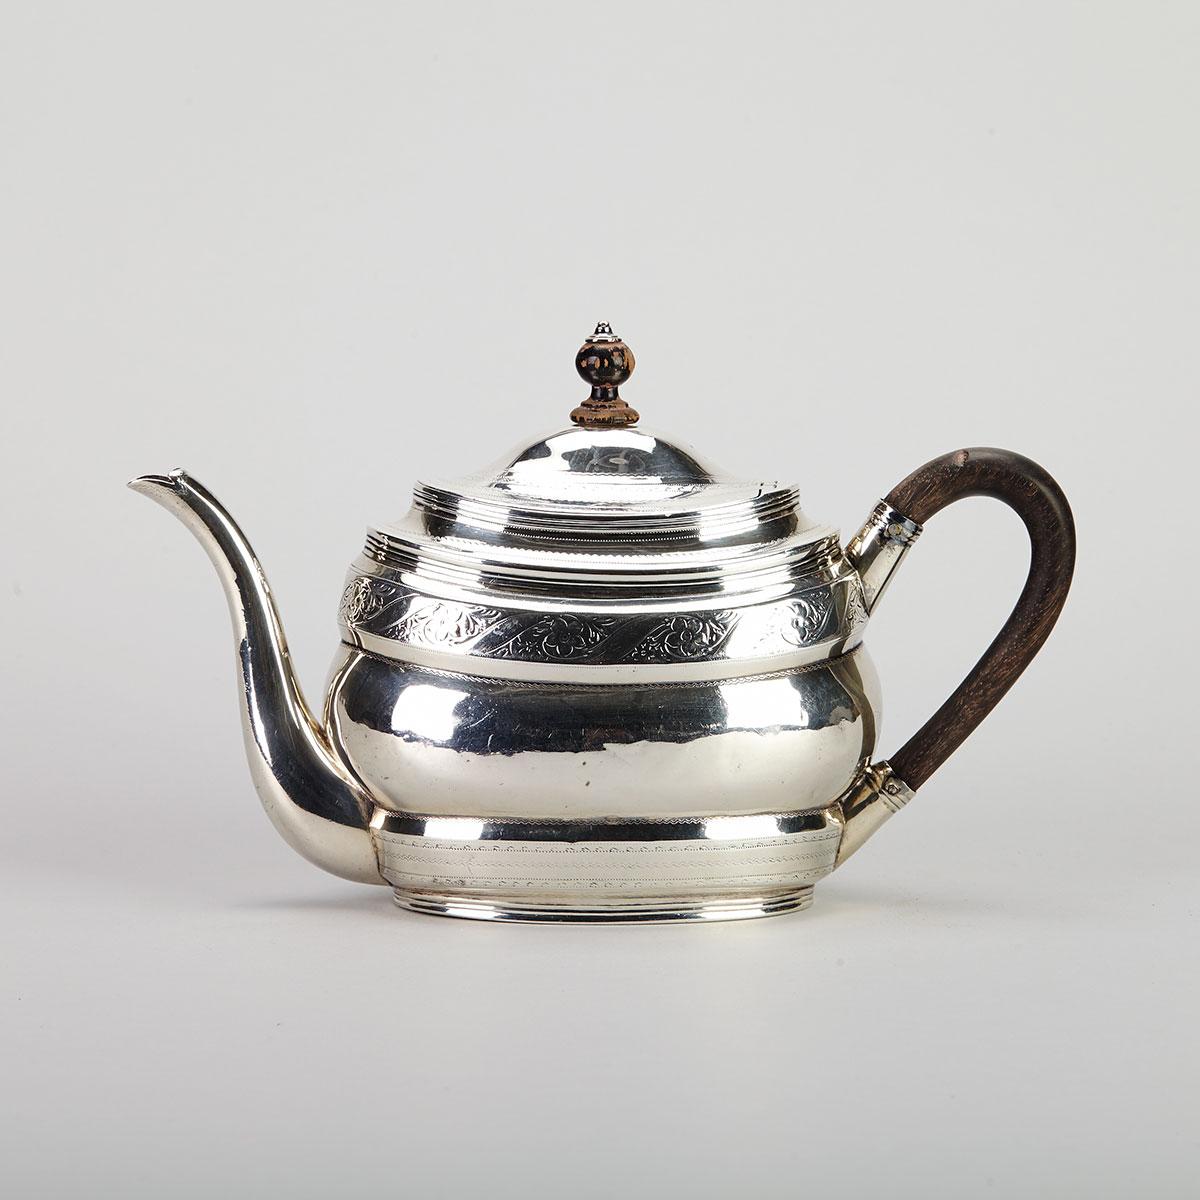 George III Silver Oval Teapot, Robert & David Hennell, London, 1800